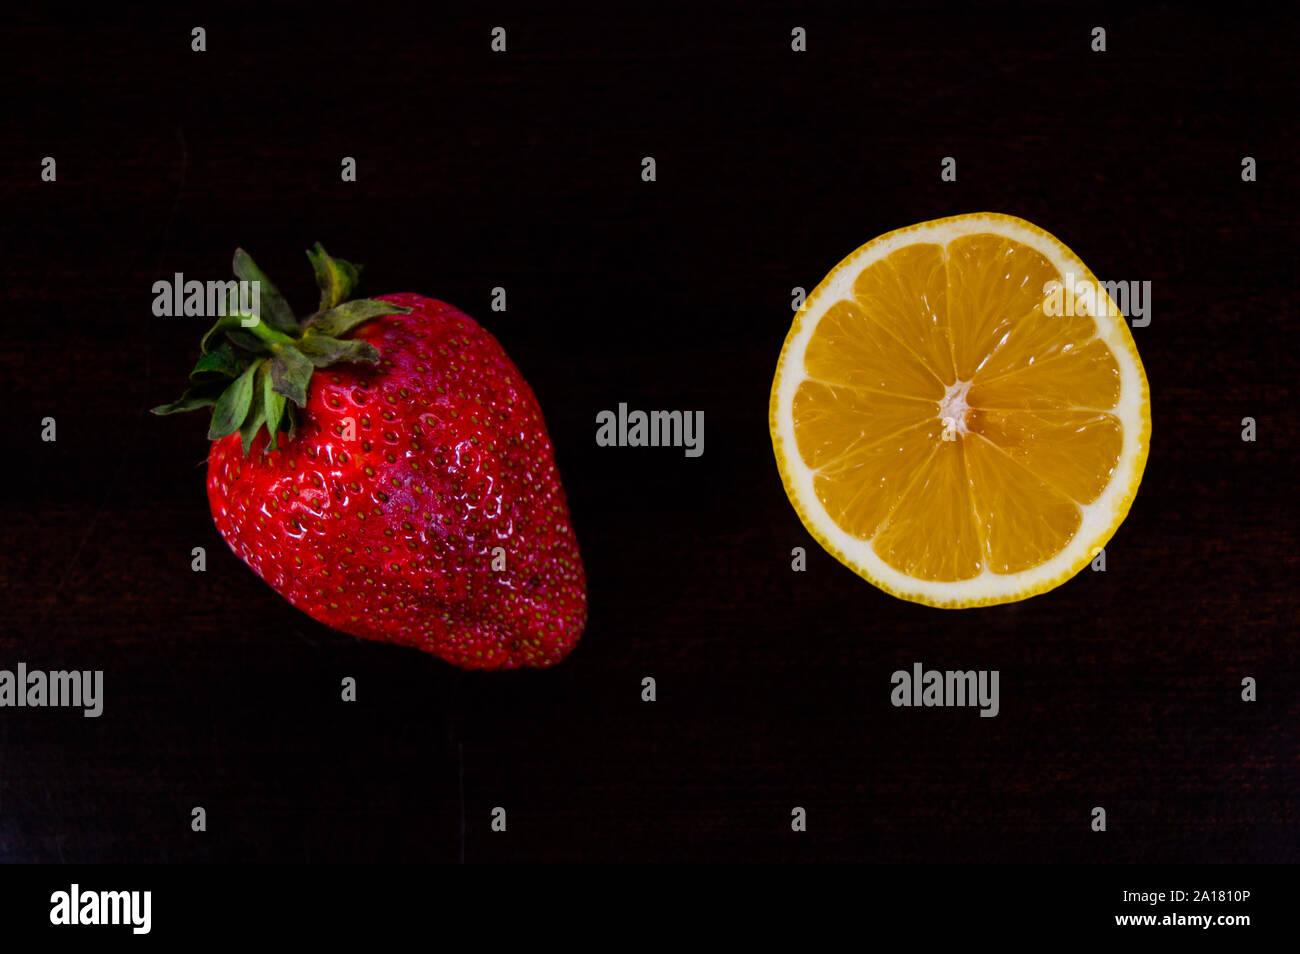 Seasonal fruit strawberry and orange isolated on a black background. Fruits concept. Stock Photo